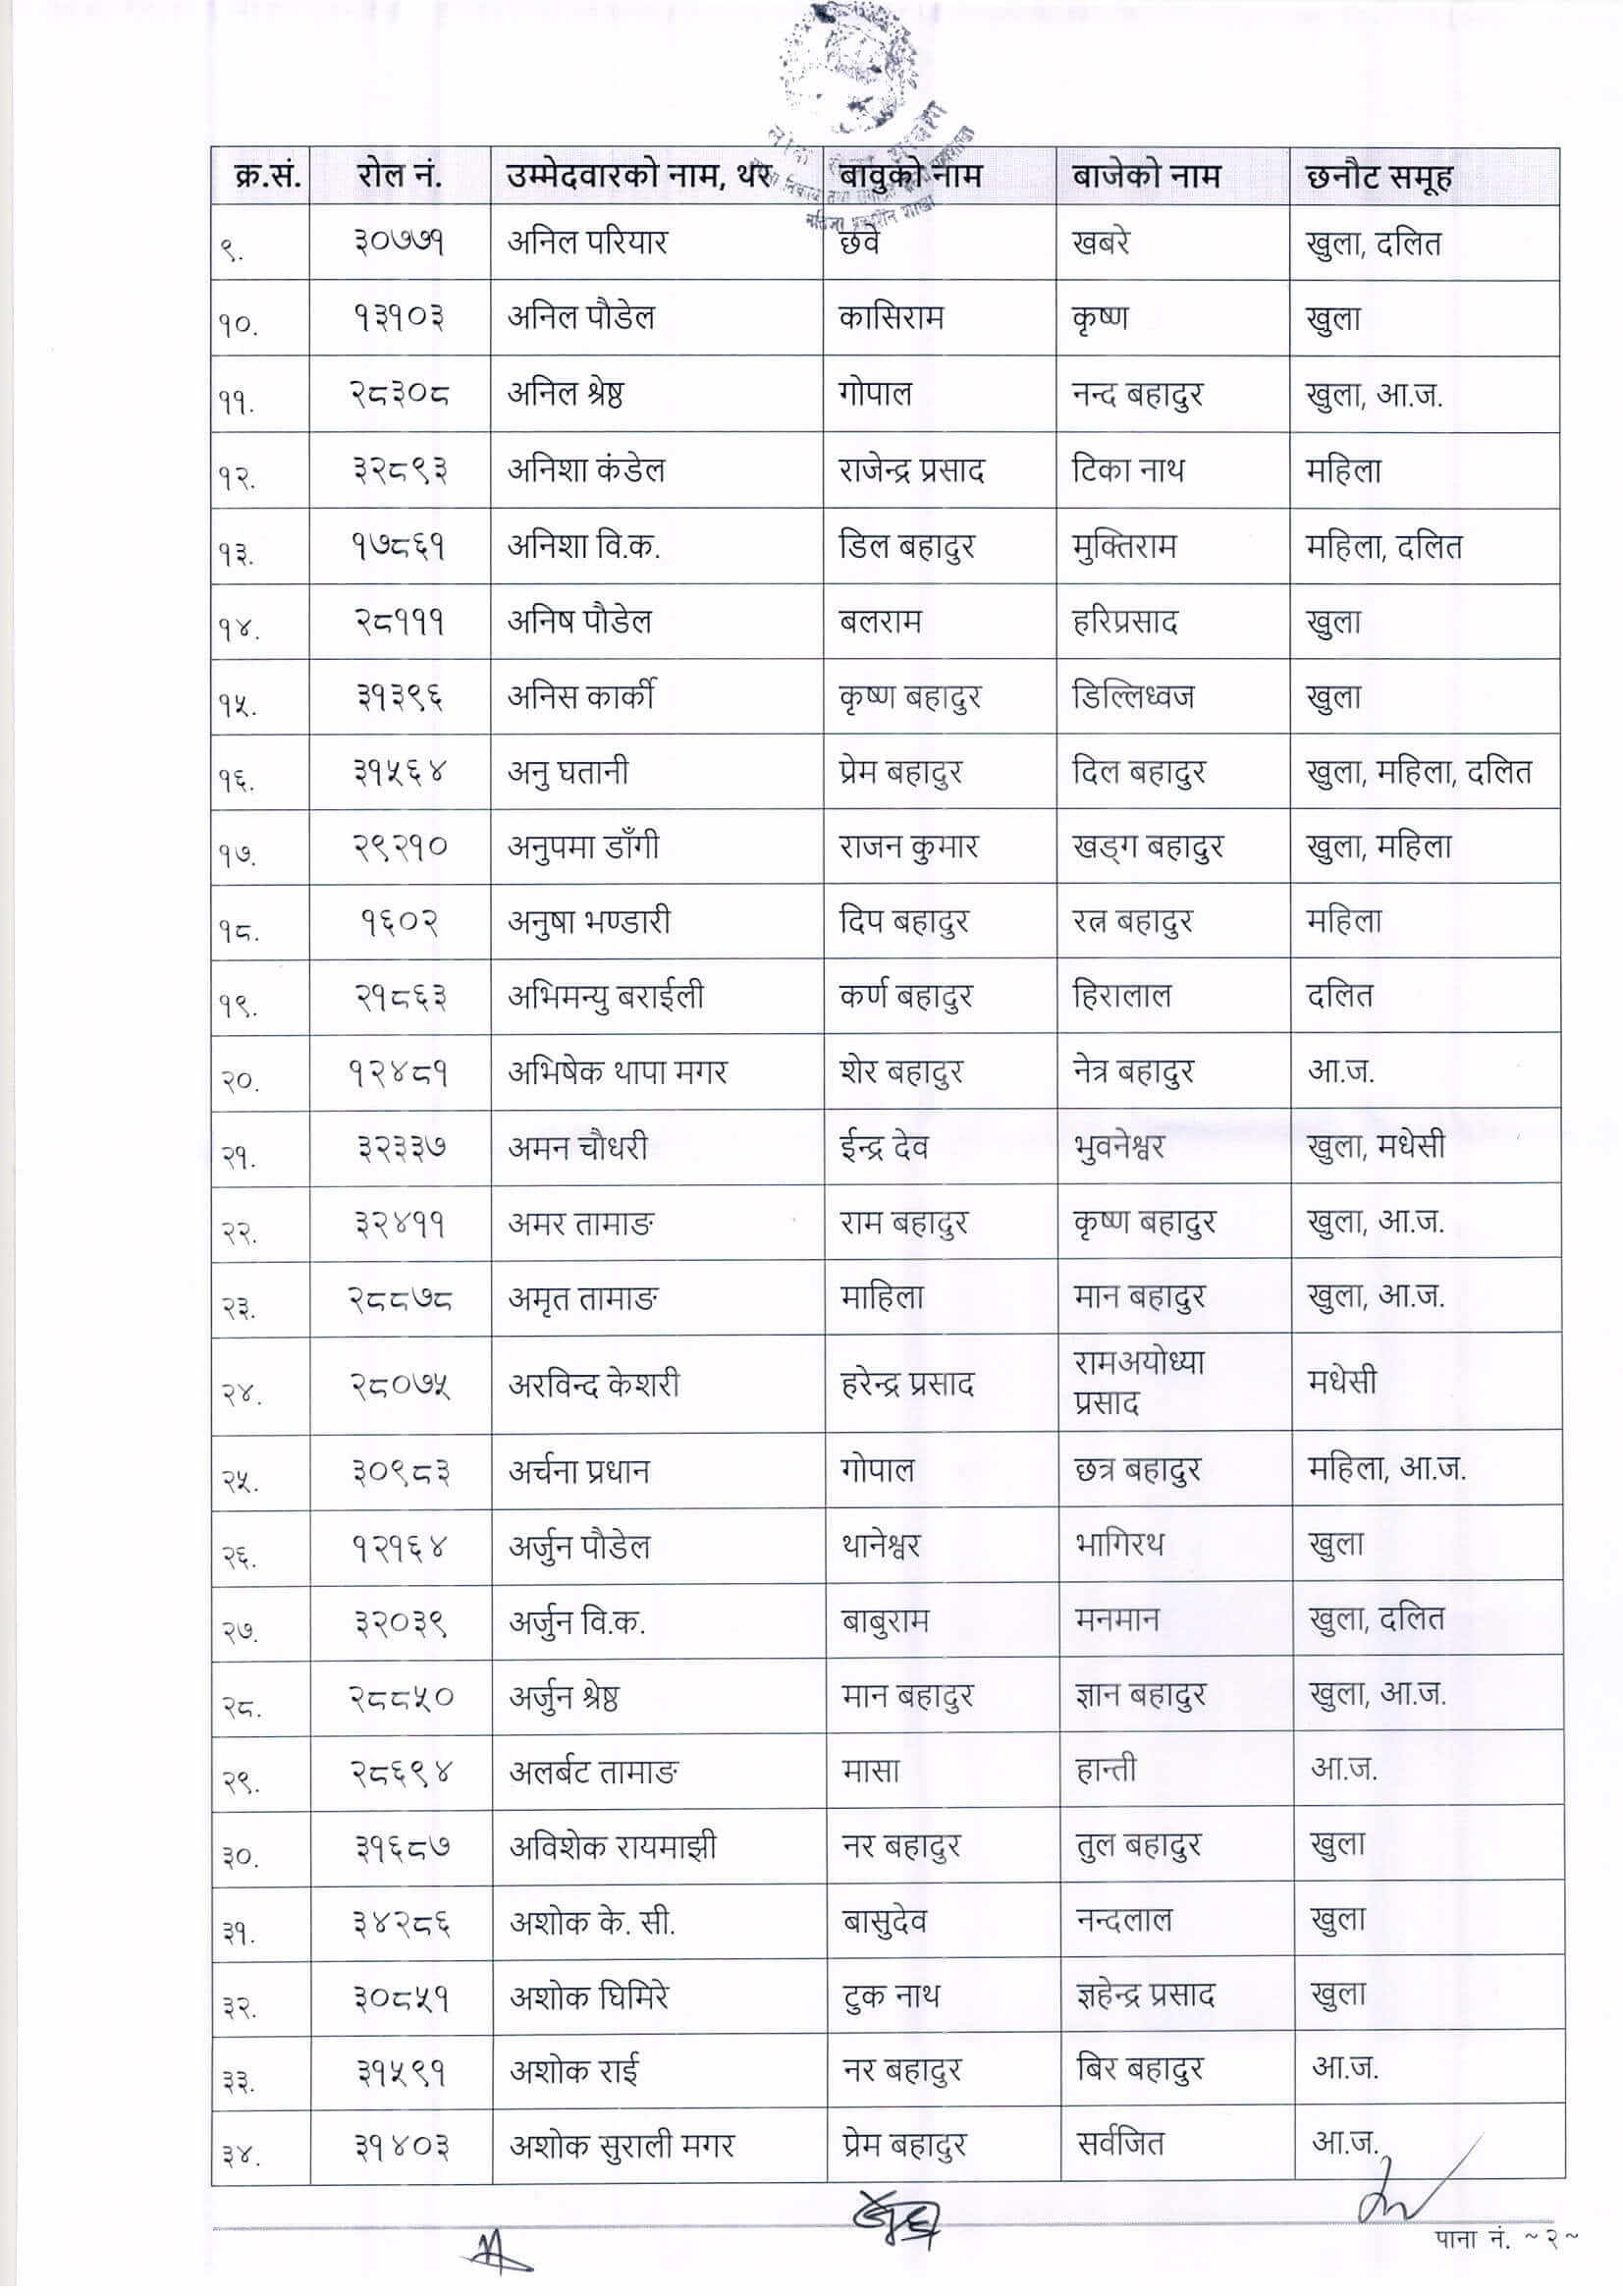 Nepal Police ASI (Janpad) Written Exam Result 2079